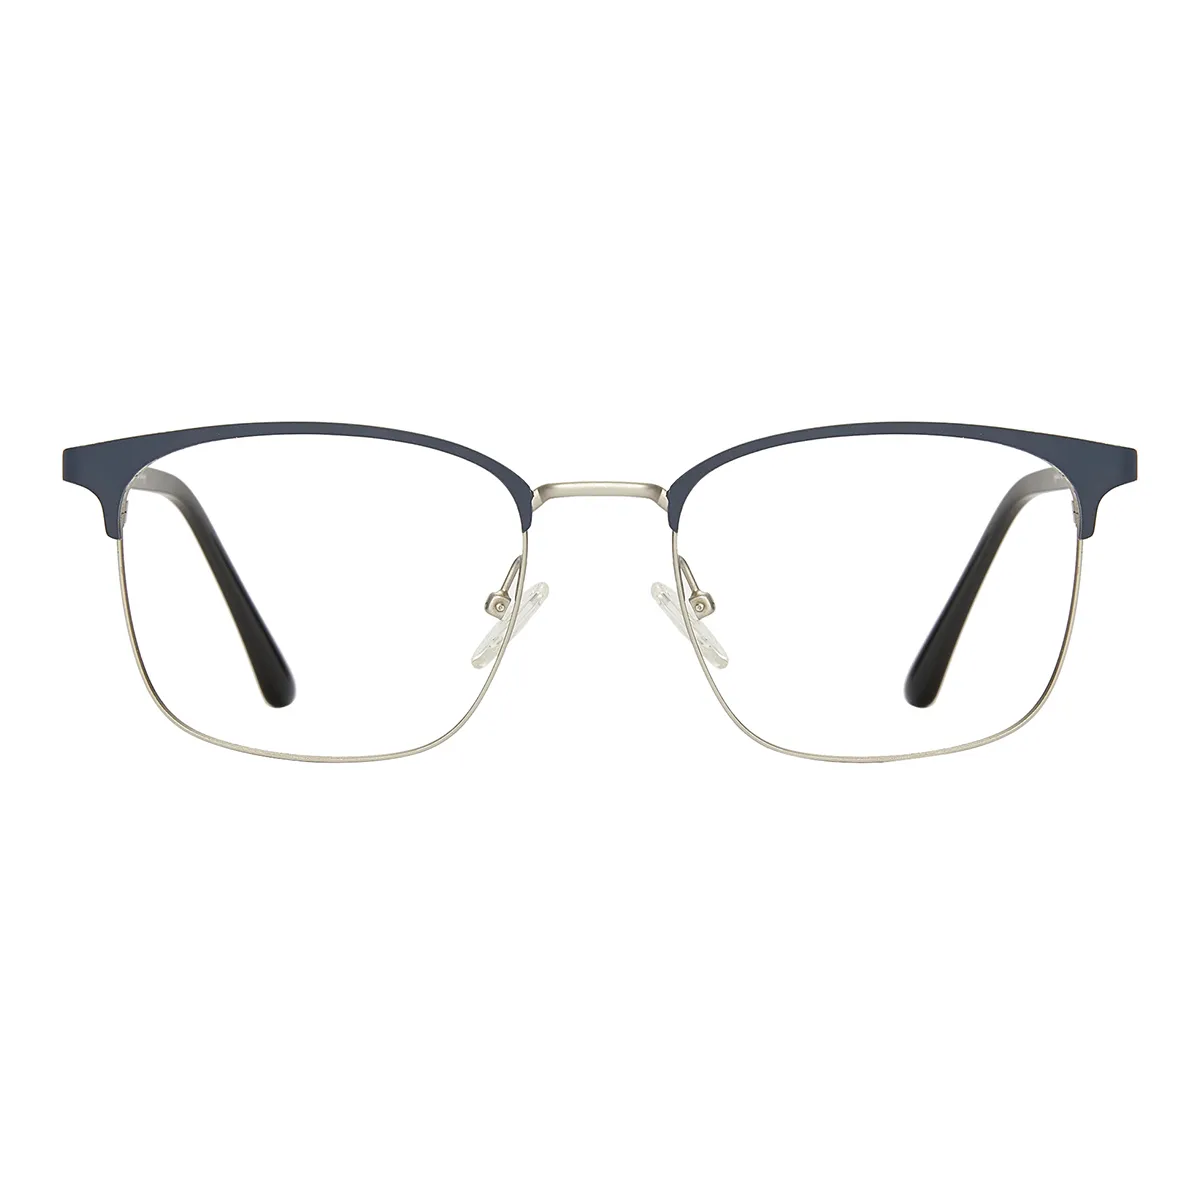 Business Square Blue-Silver  Reading Glasses for Men